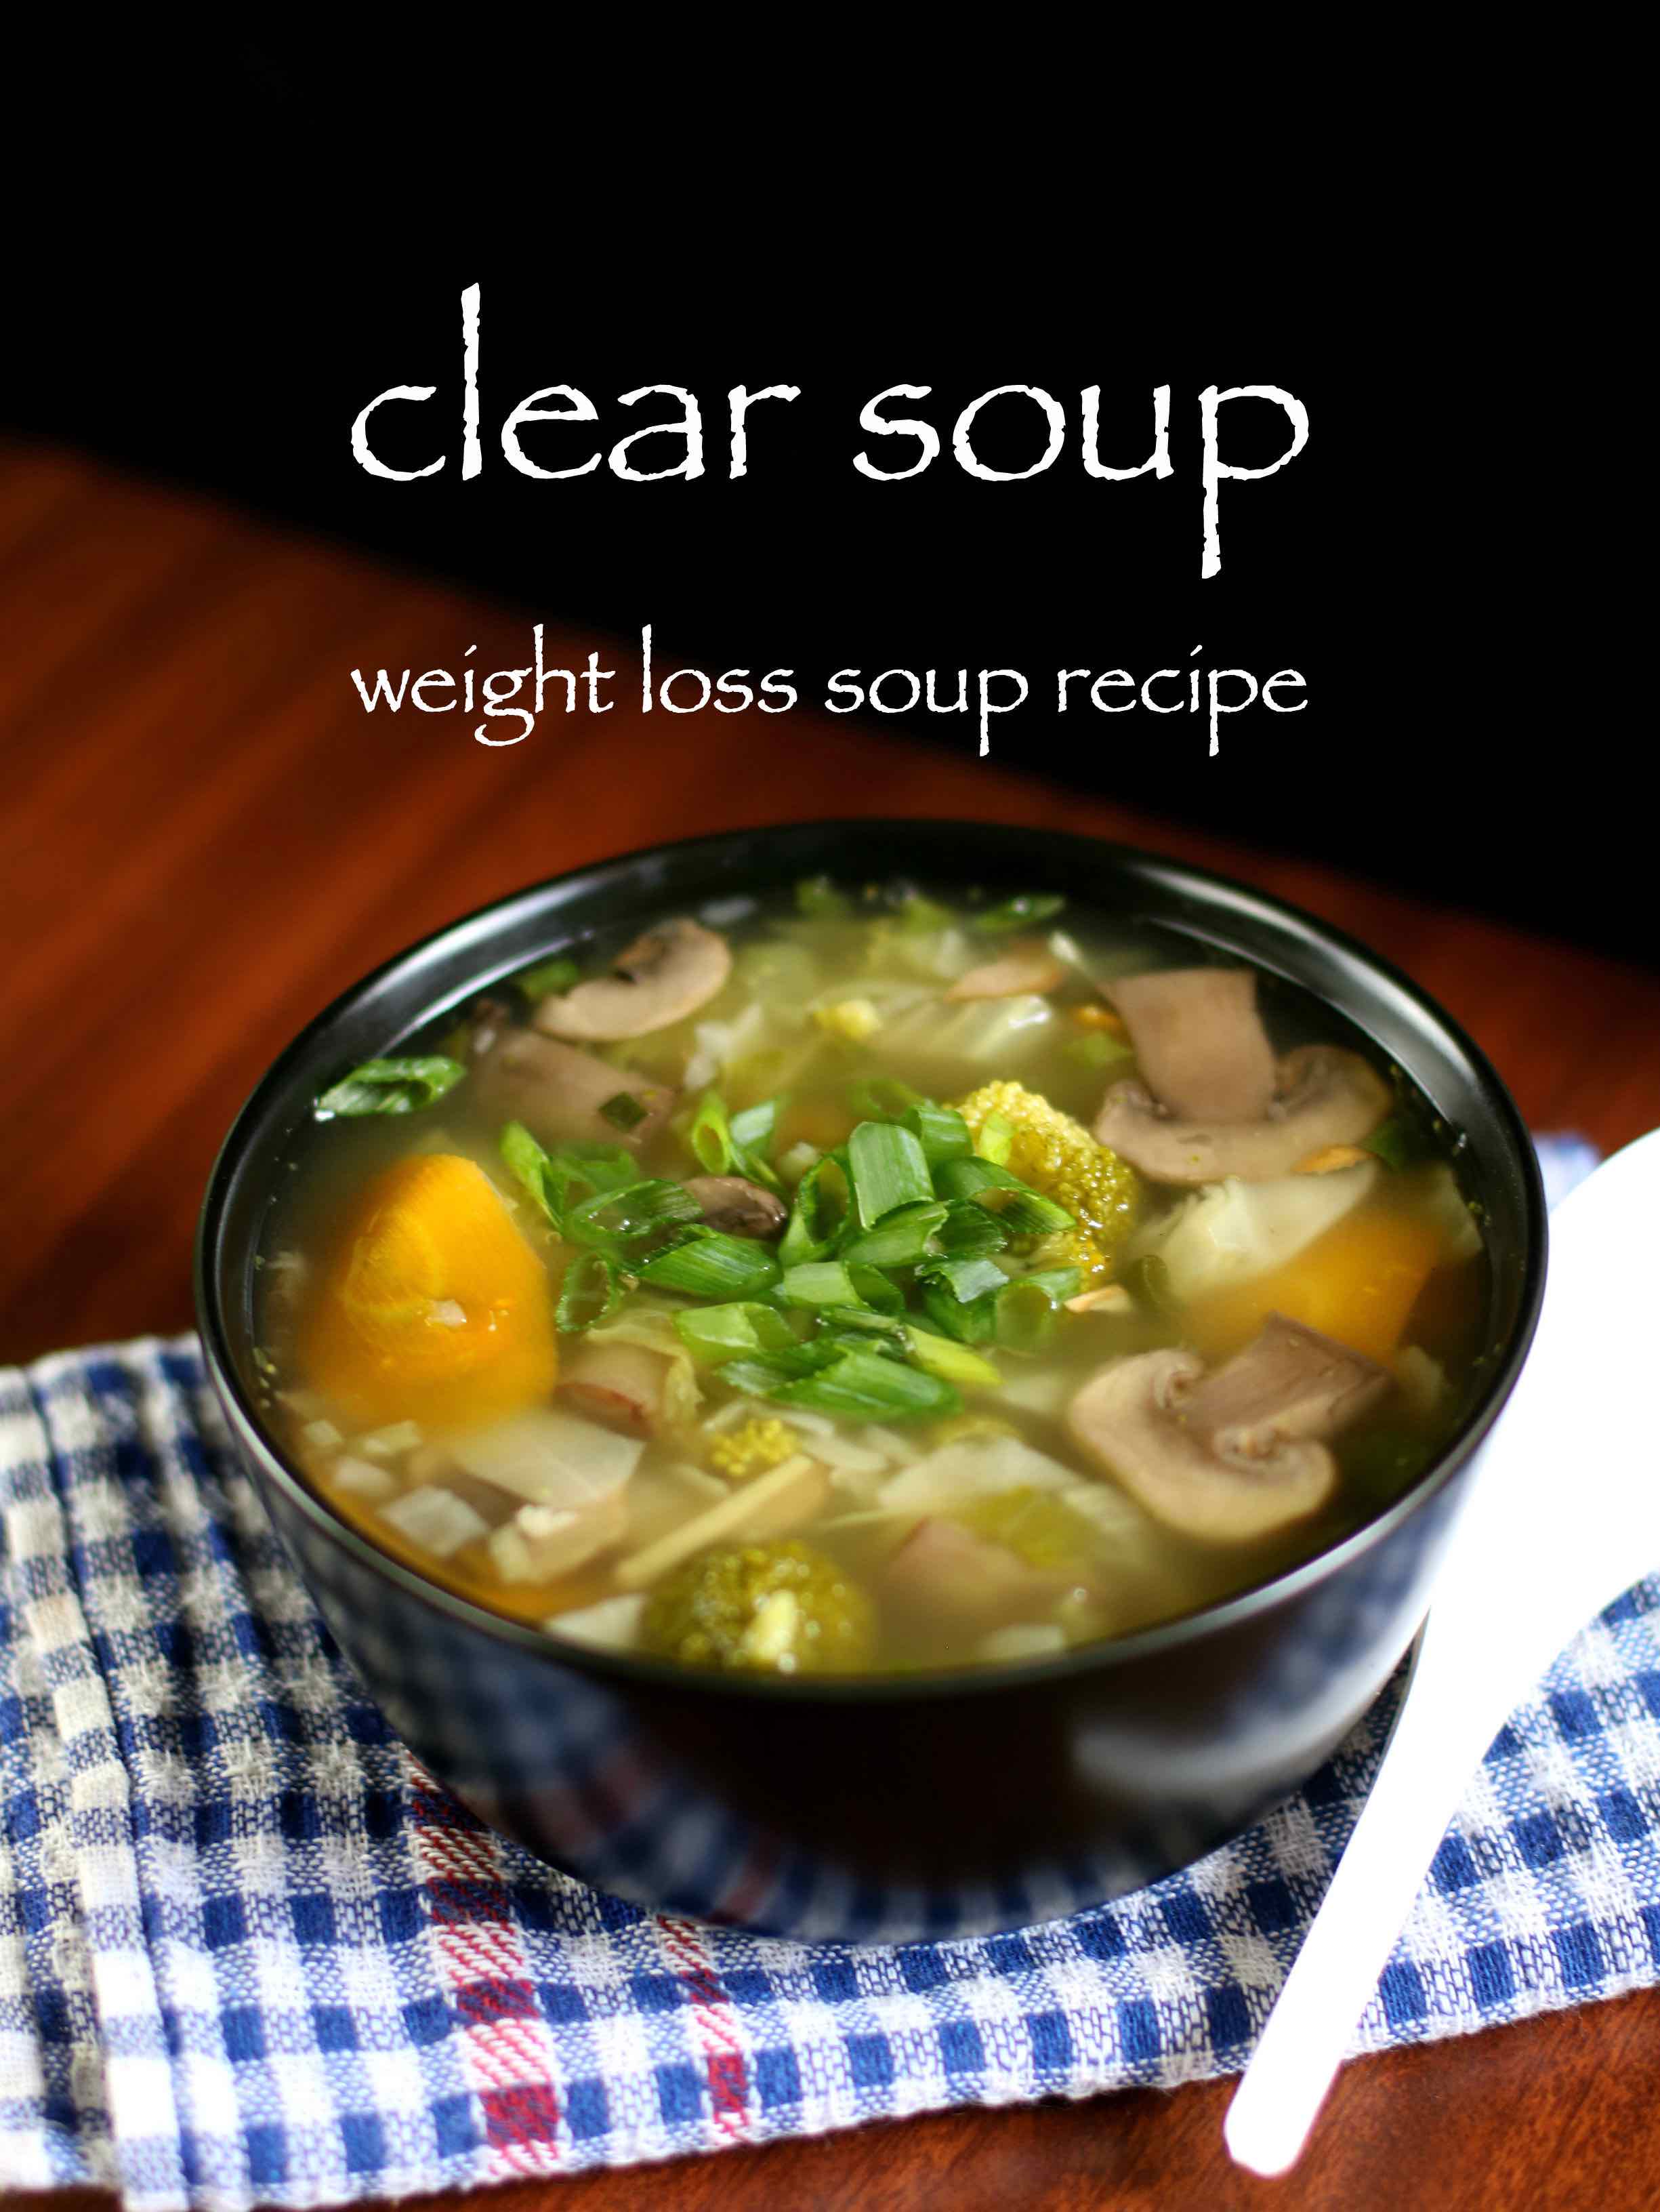 https://hebbarskitchen.com/wp-content/uploads/mainPhotos/clear-soup-recipe-veg-clear-soup-recipe-clear-vegetable-soup-recipe-12.jpeg